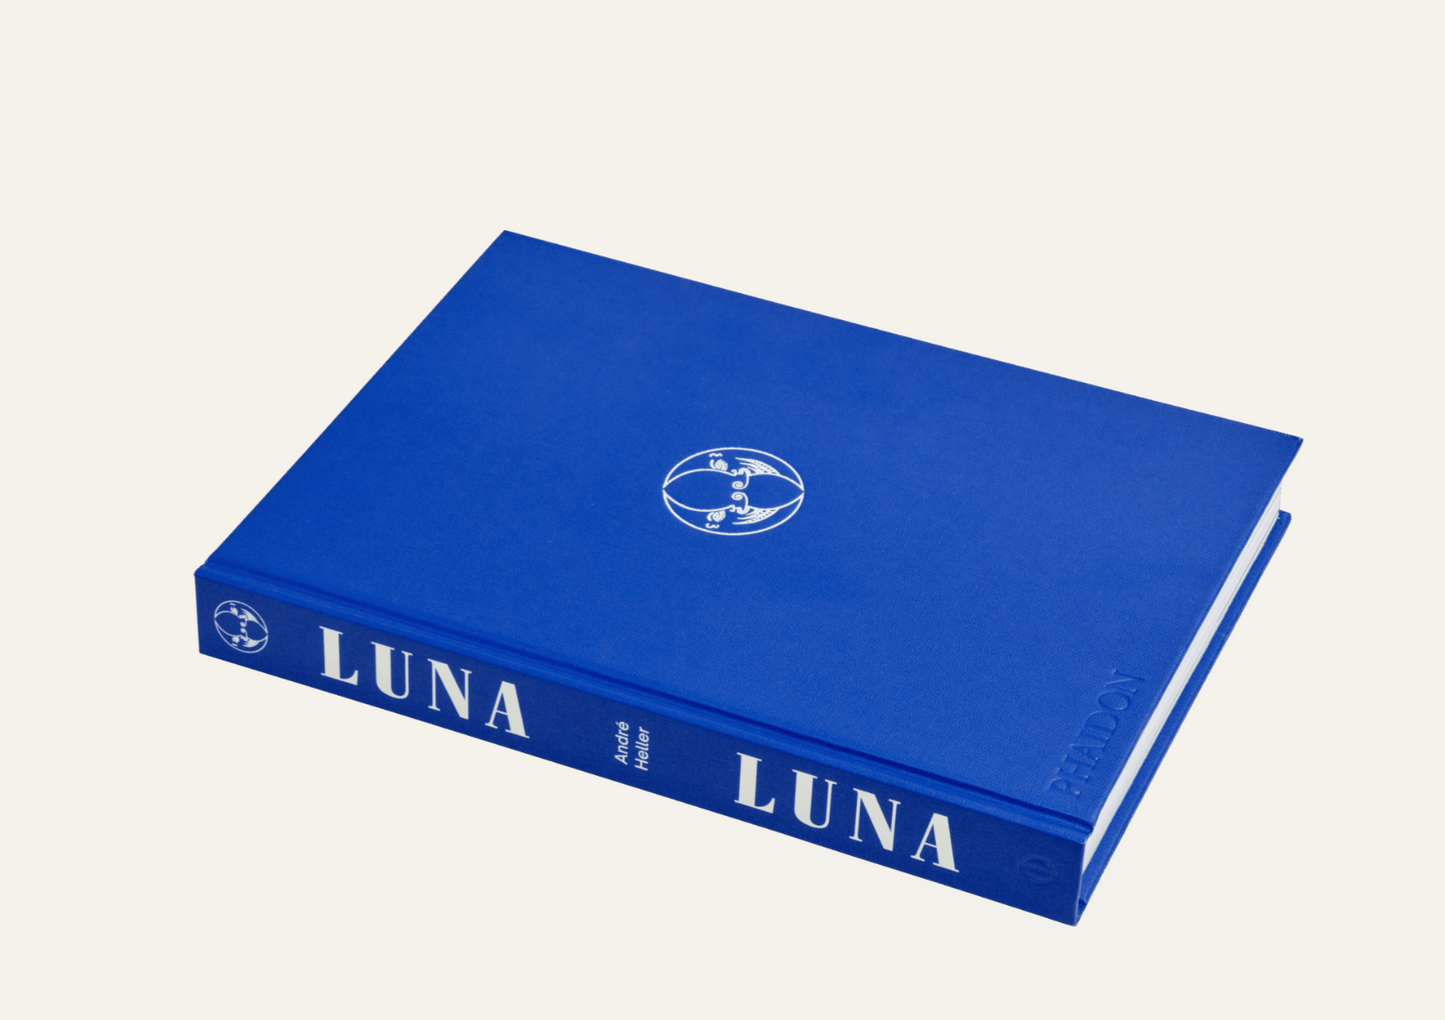 Luna Luna: The Art Amusement Park